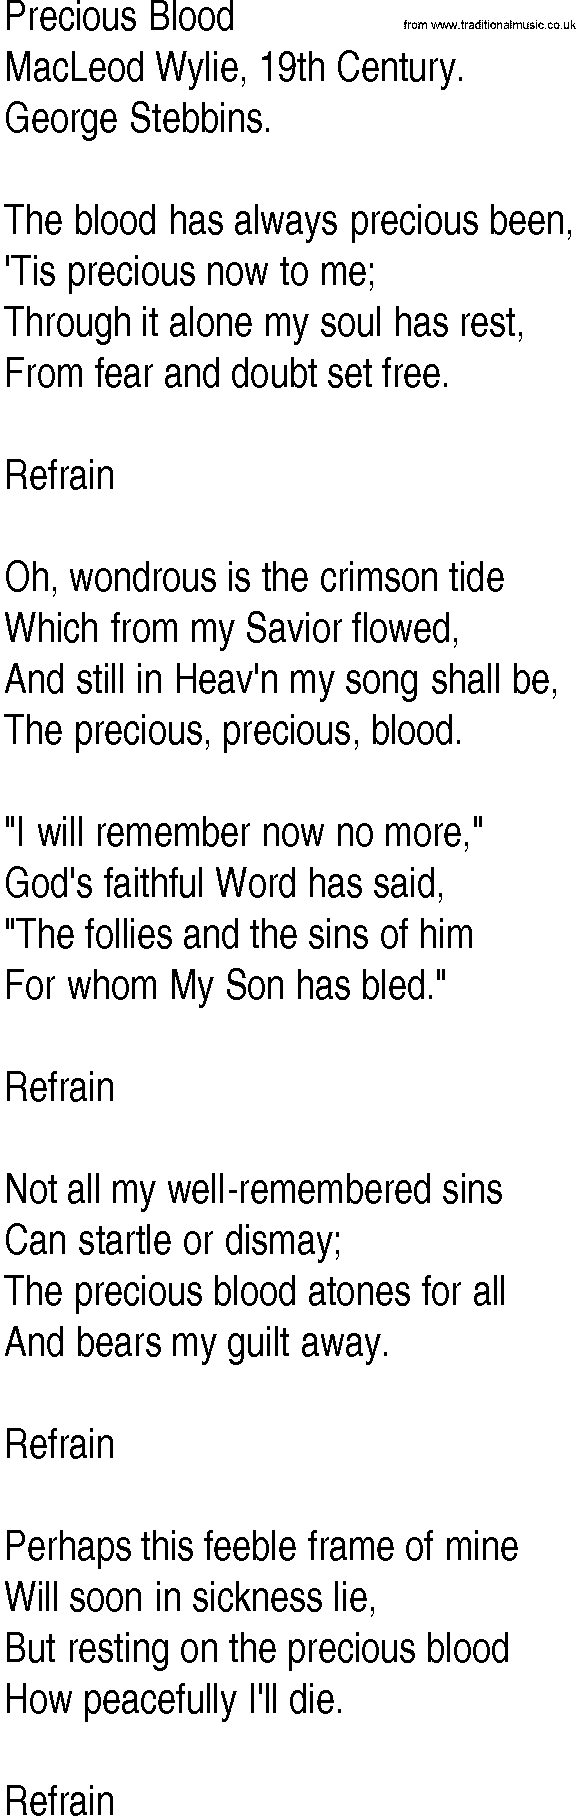 Hymn and Gospel Song: Precious Blood by MacLeod Wylie lyrics